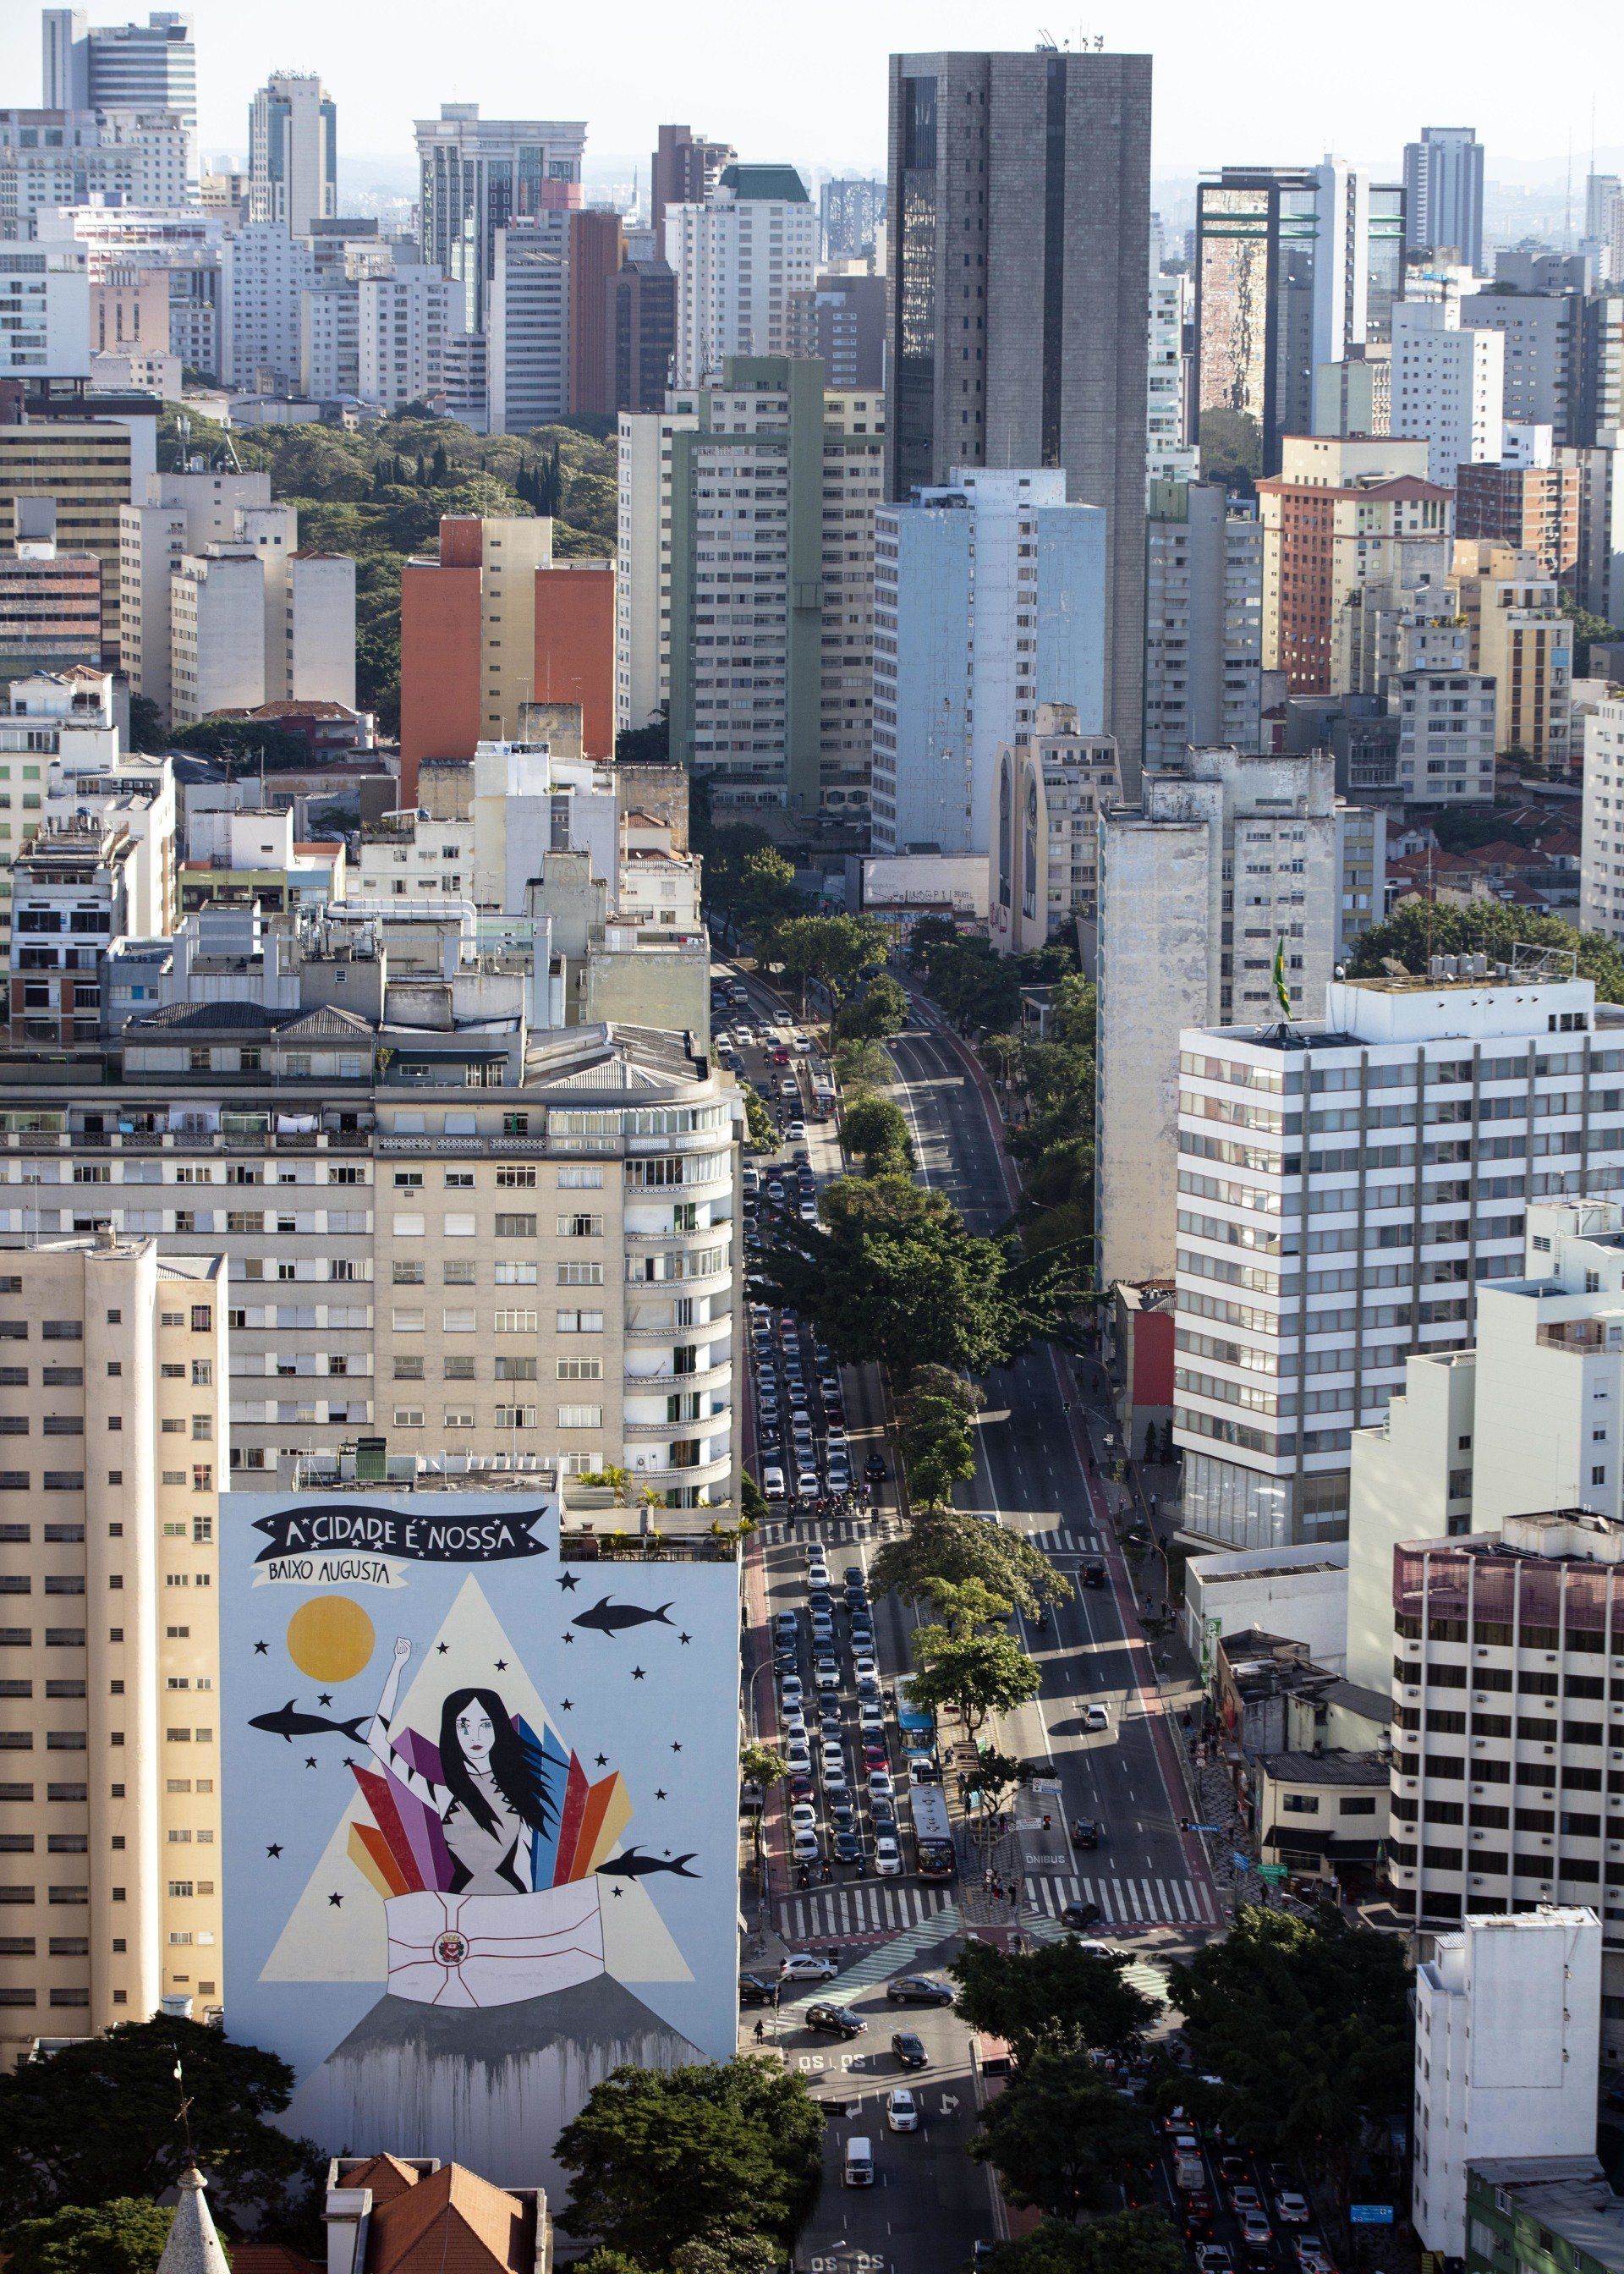 Urban landscape of the city of São Paulo, Brazil